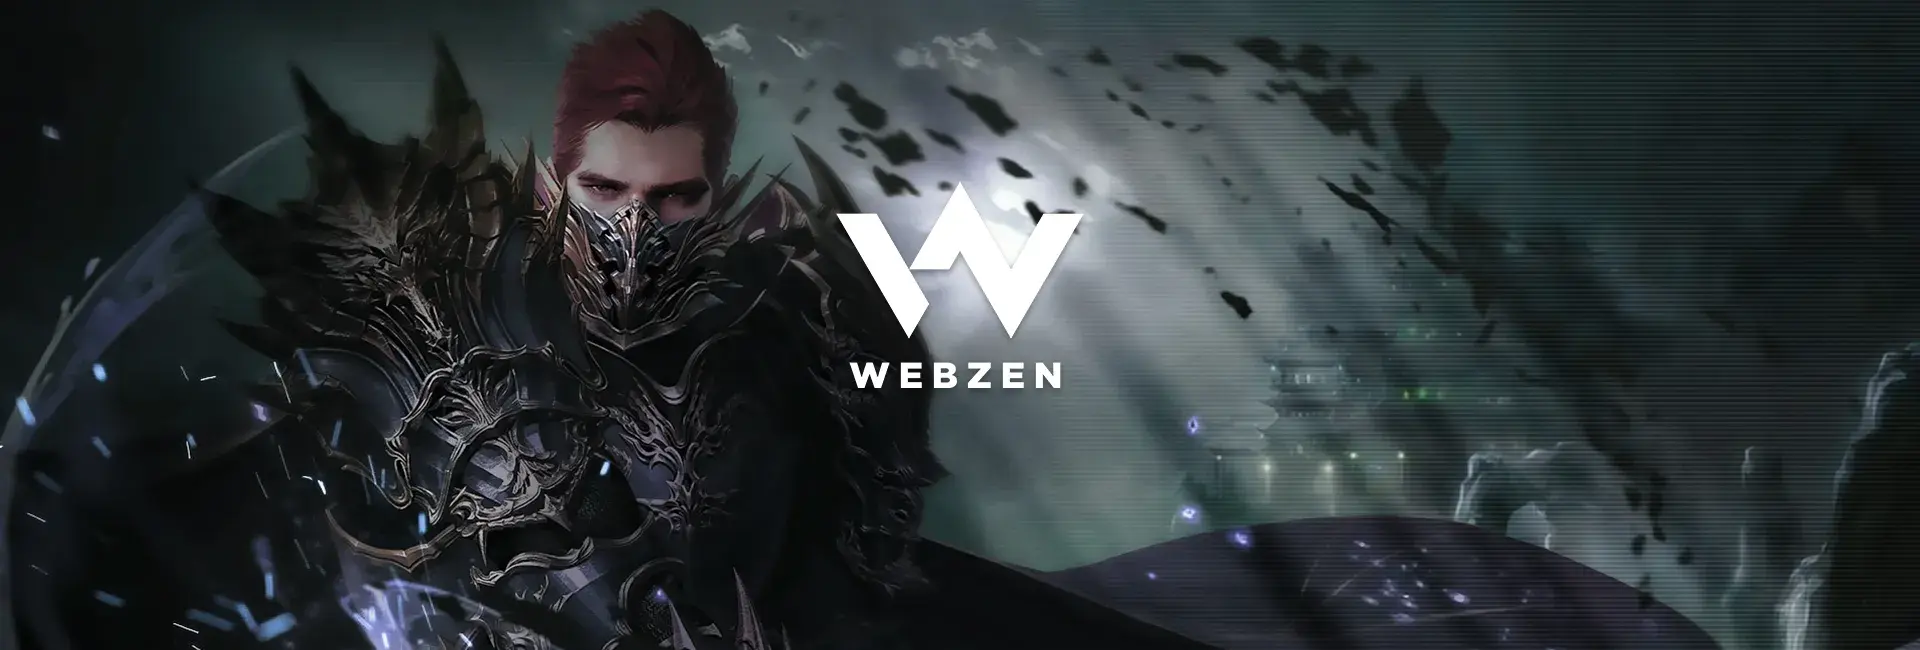 Webzen 2000 Wcoin